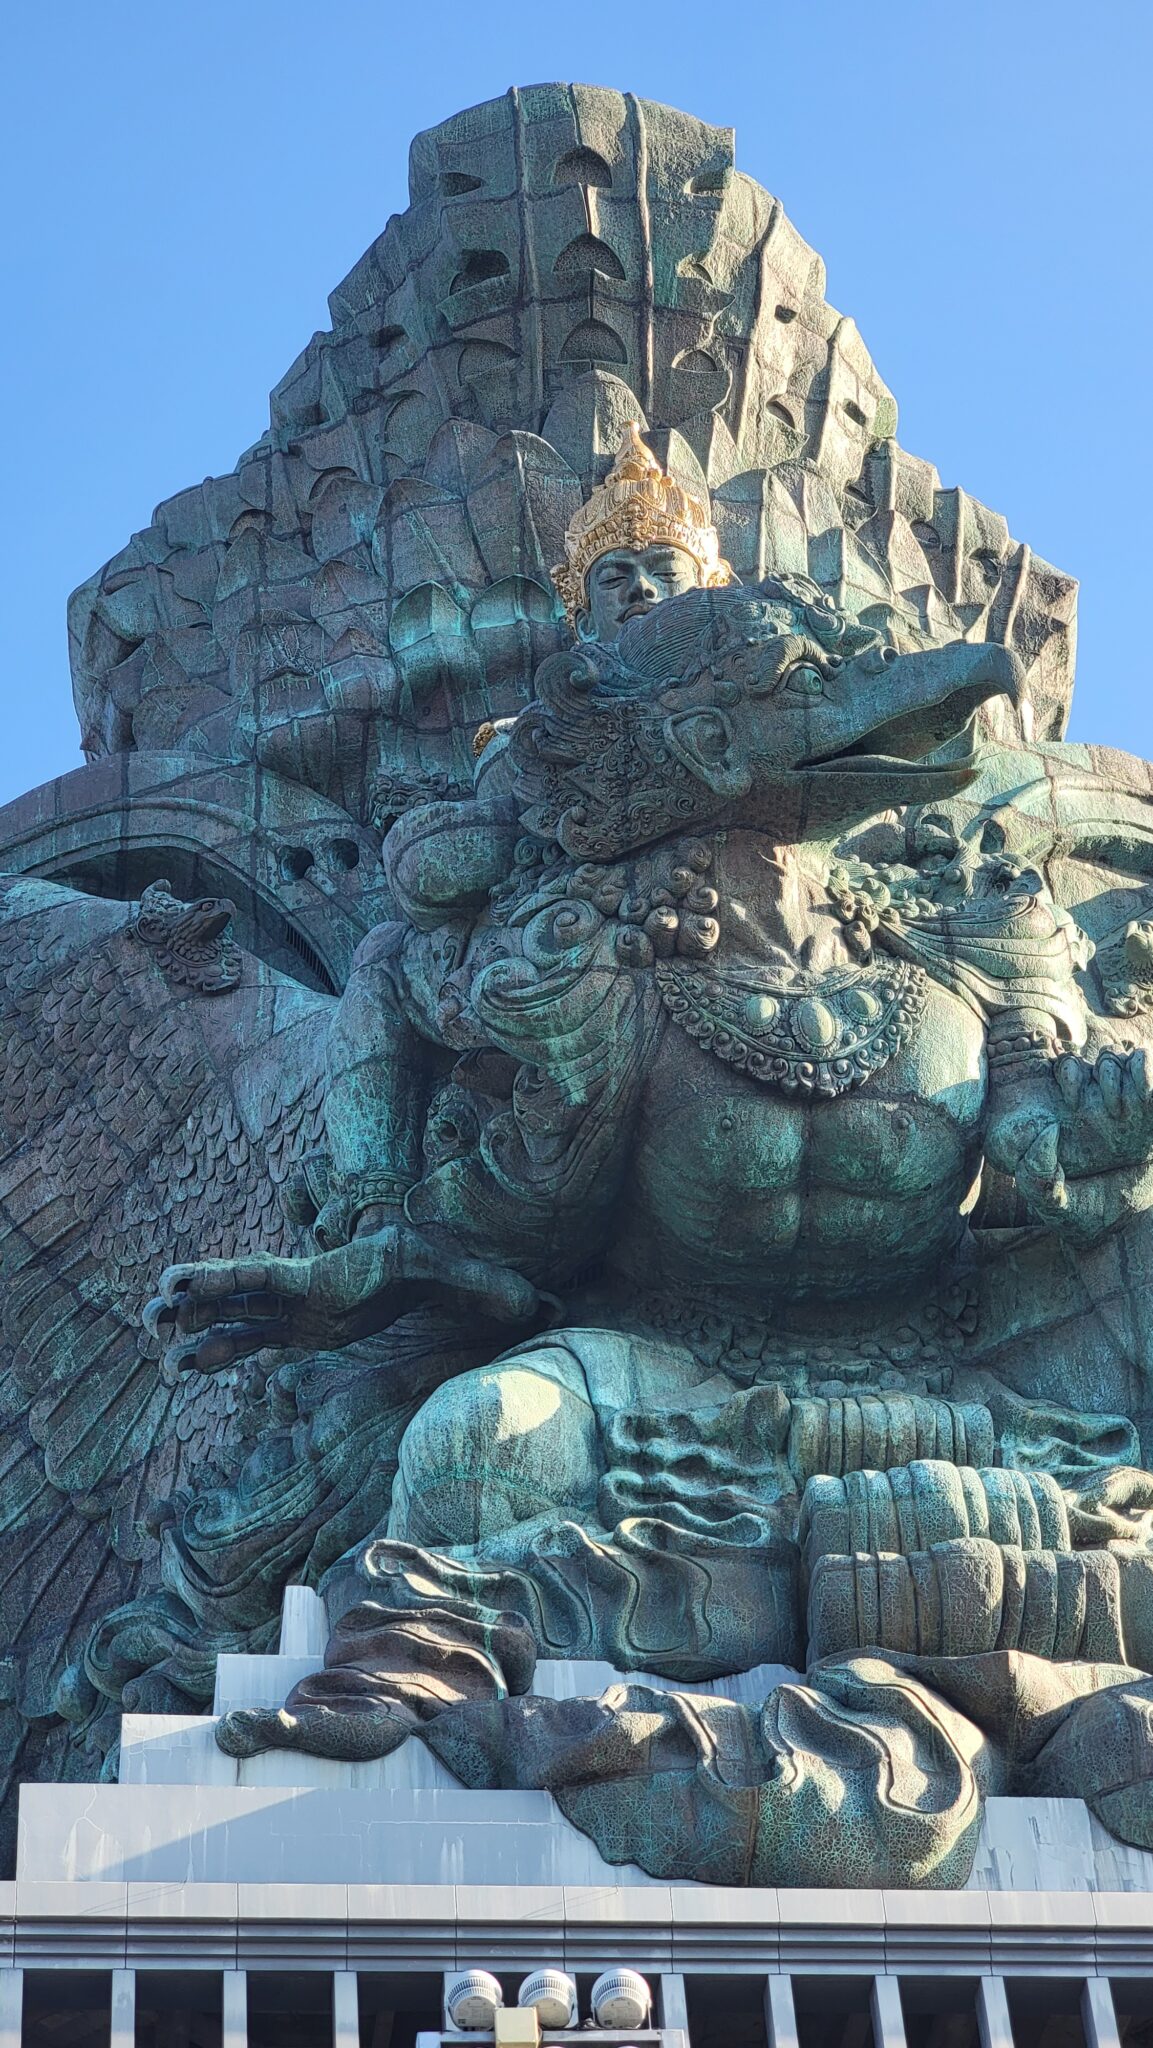 Garuda Wisnu Kencana monument in Bali.